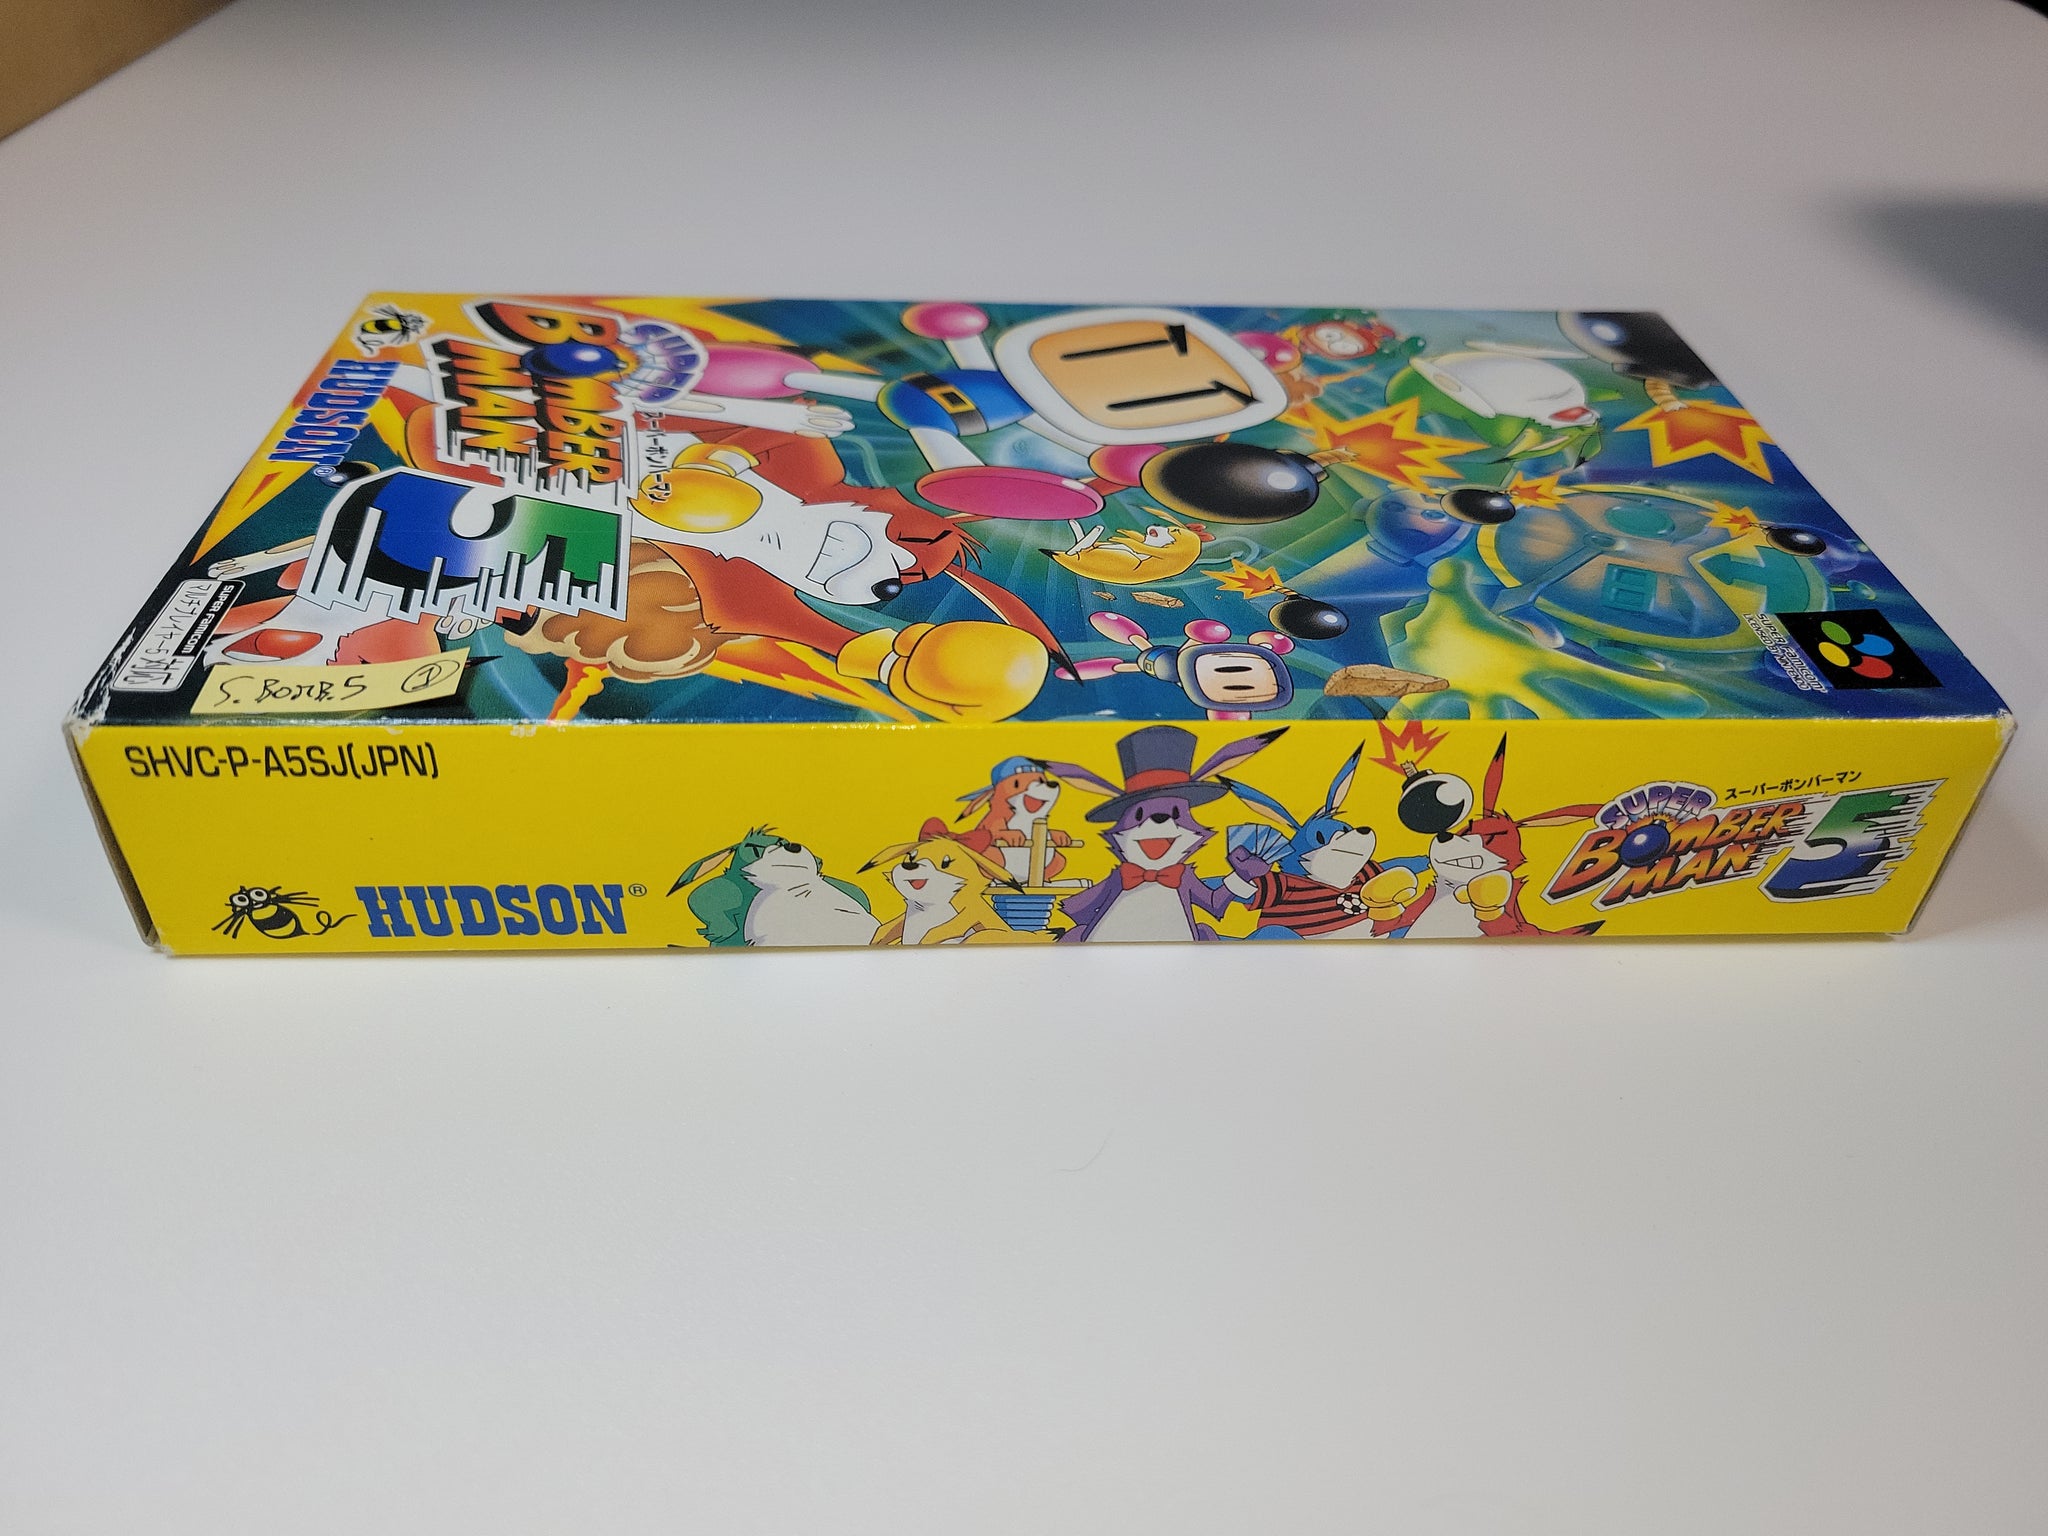 Super Bomberman 5 Super Famicom SFC SNES from Japan Complete